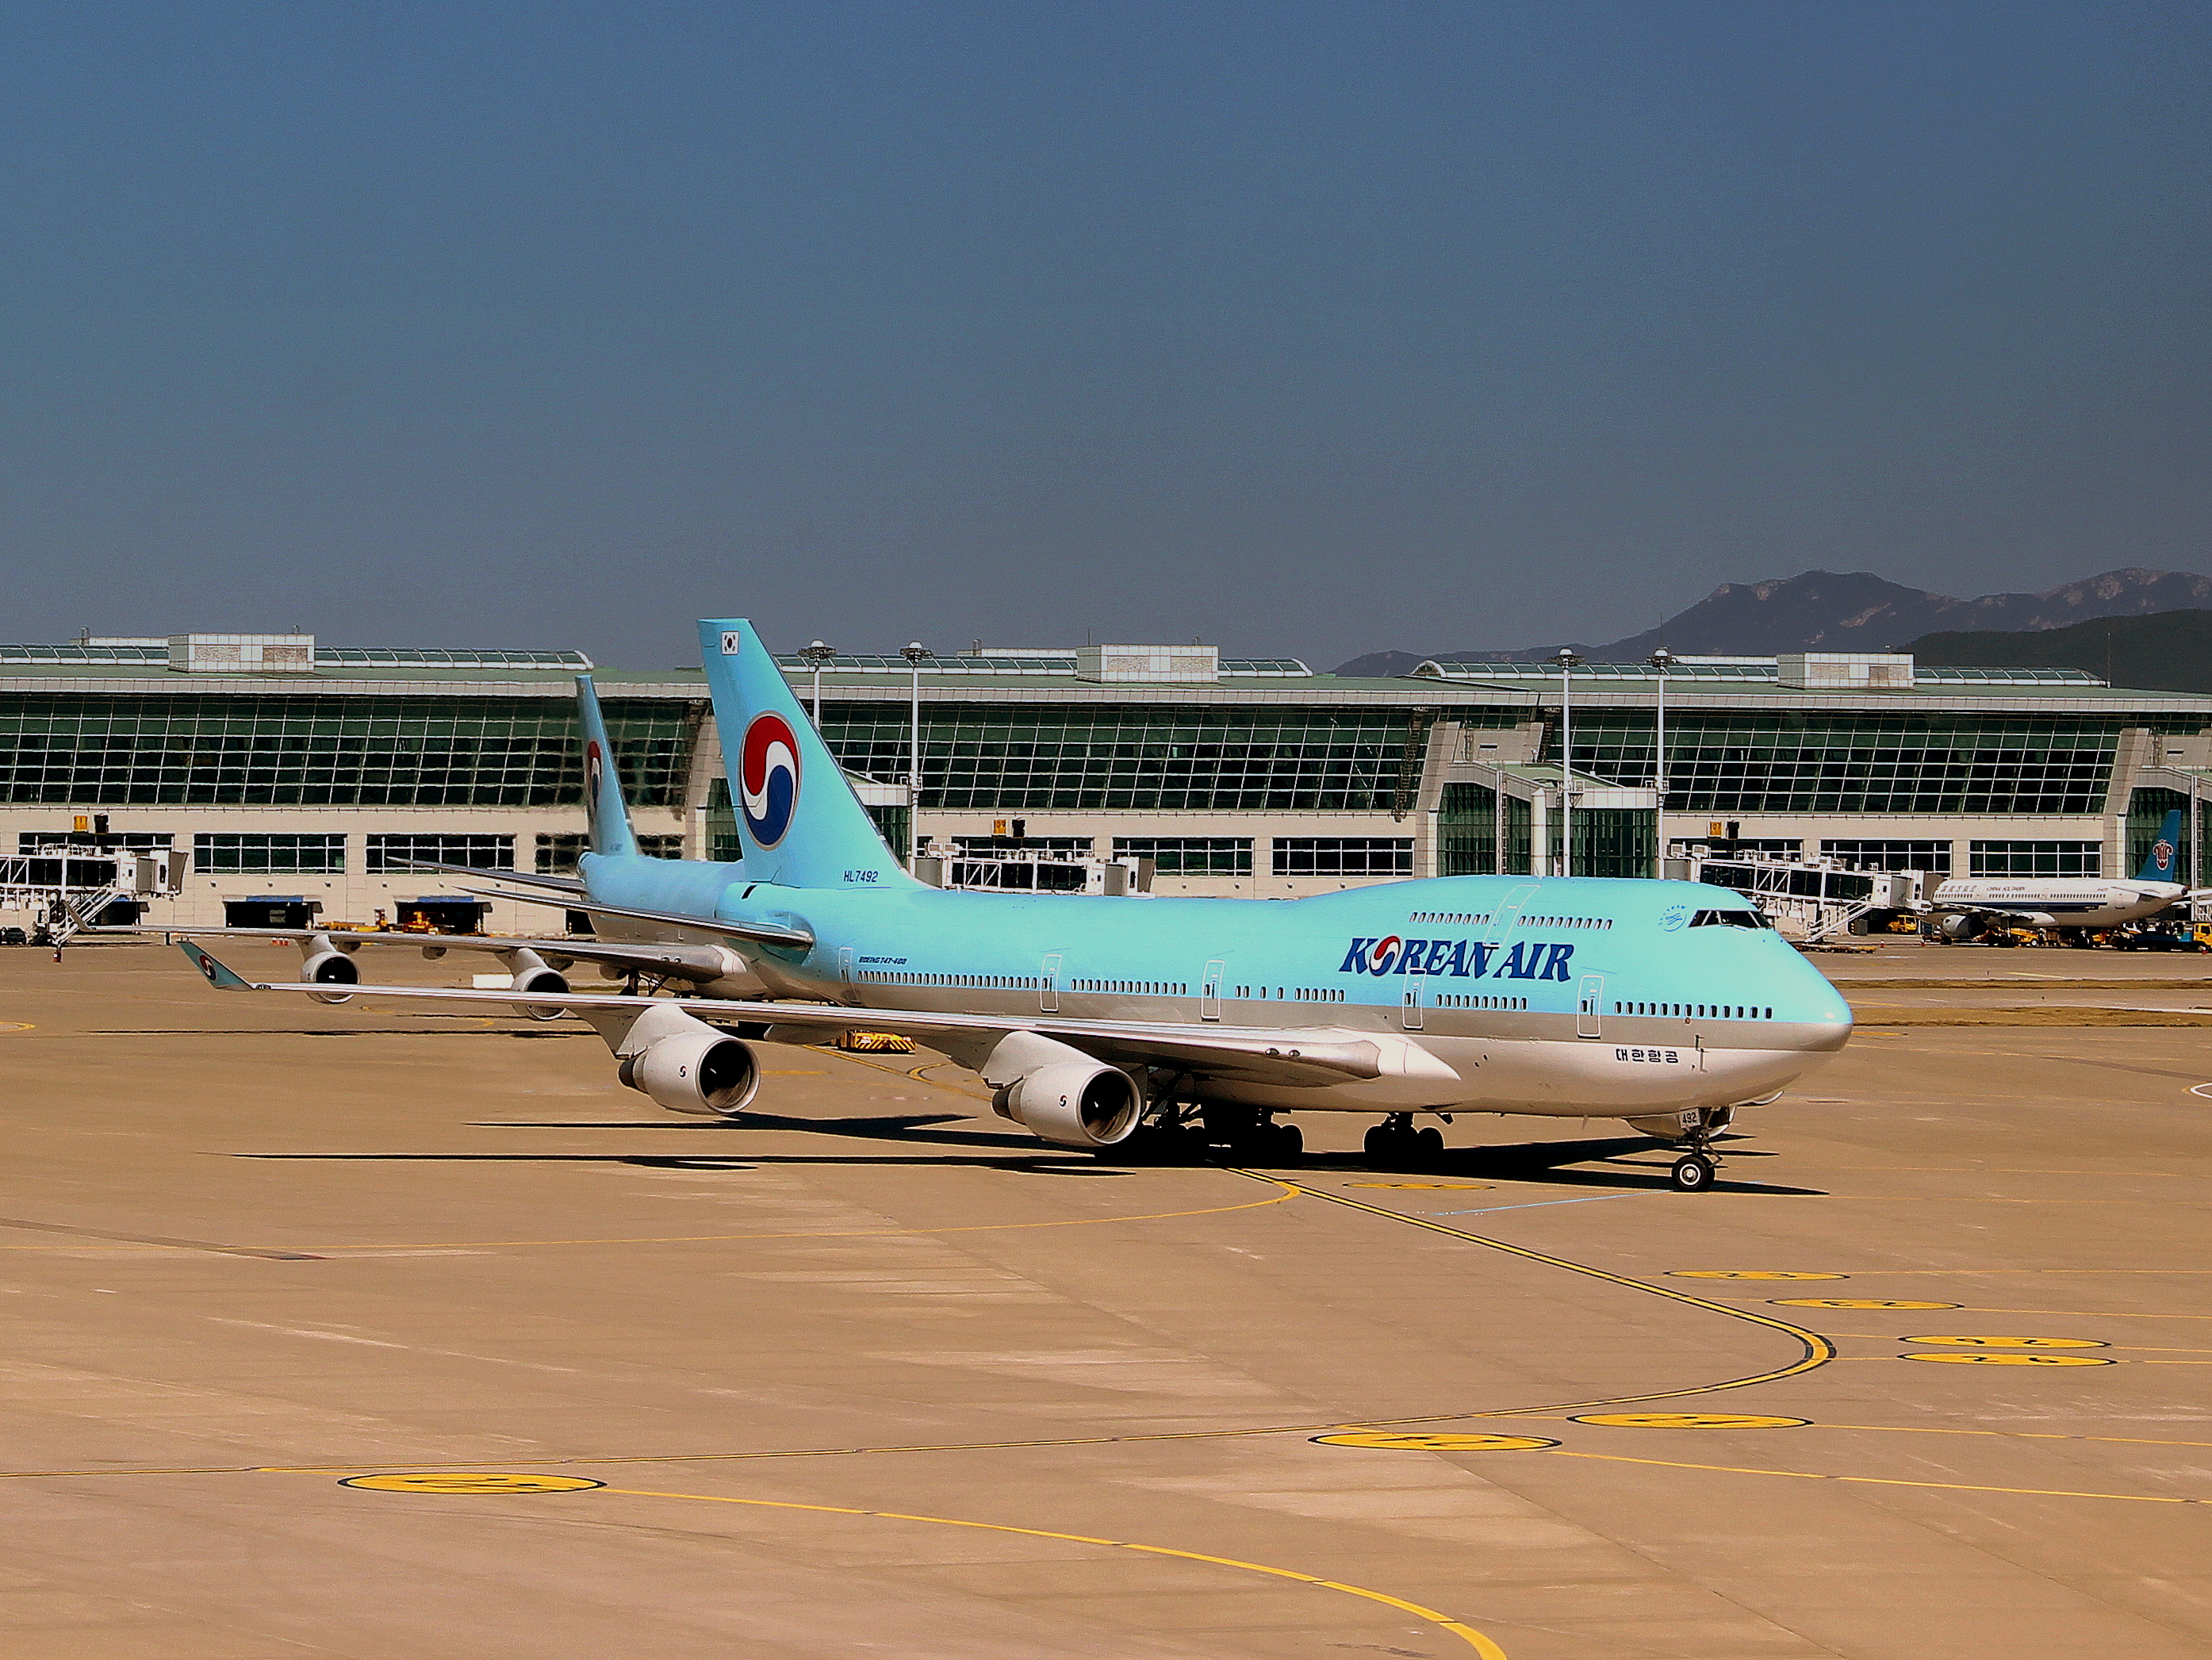 KOREAN AIR BOEING 747-400.S AT SEOUL INCHEON AIRPORT SOUTH KOREA OCT 2012 (8178469970)